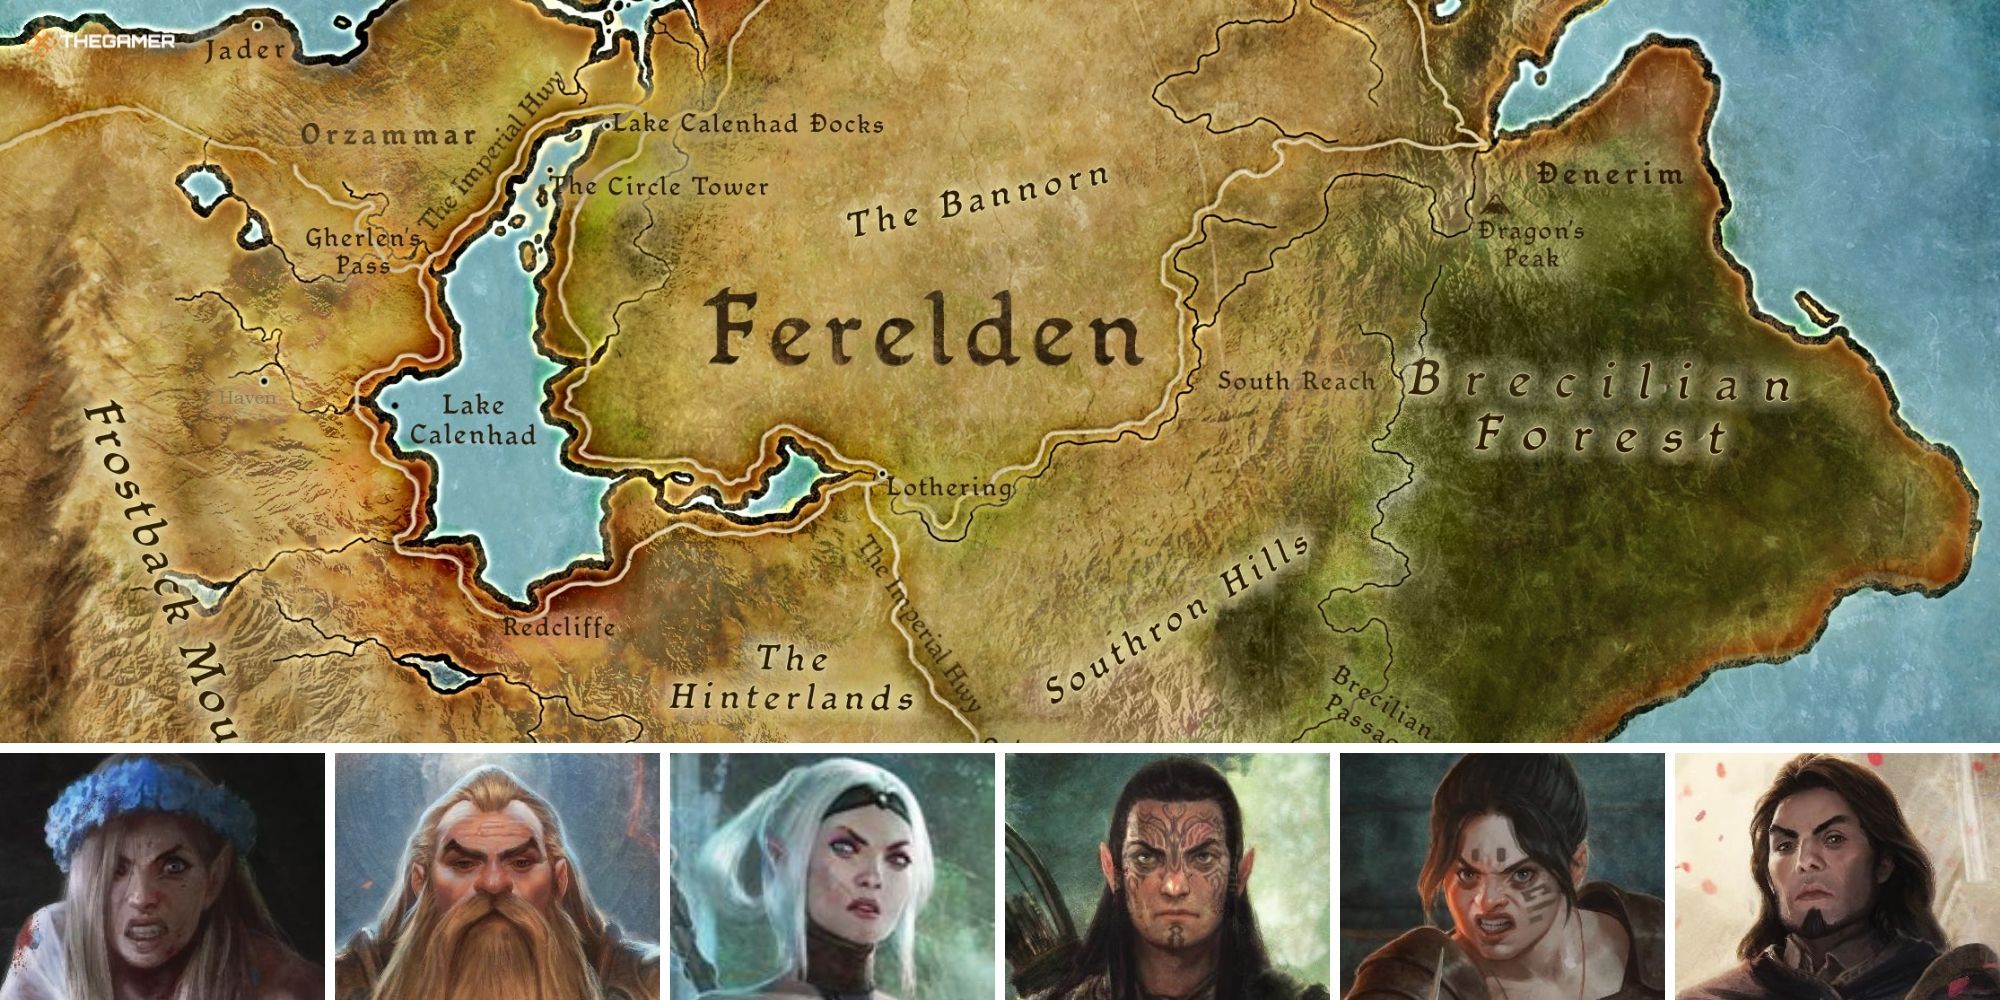 Dragon Age Origins - Map of Ferelden on top, promo art of origins along the bottom